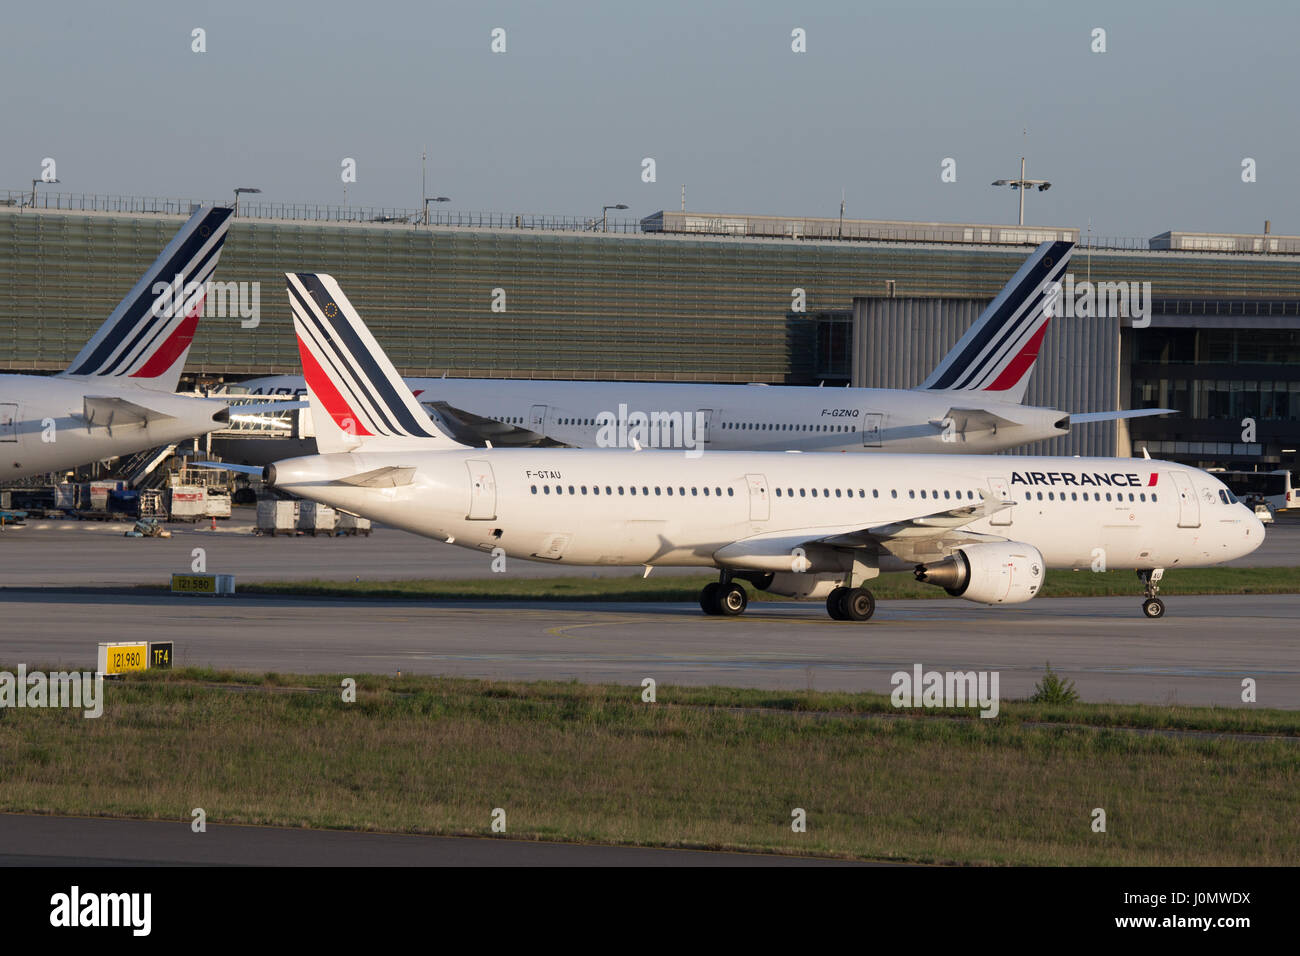 Air France Airbus A321 Aircraft Image Stock Photo